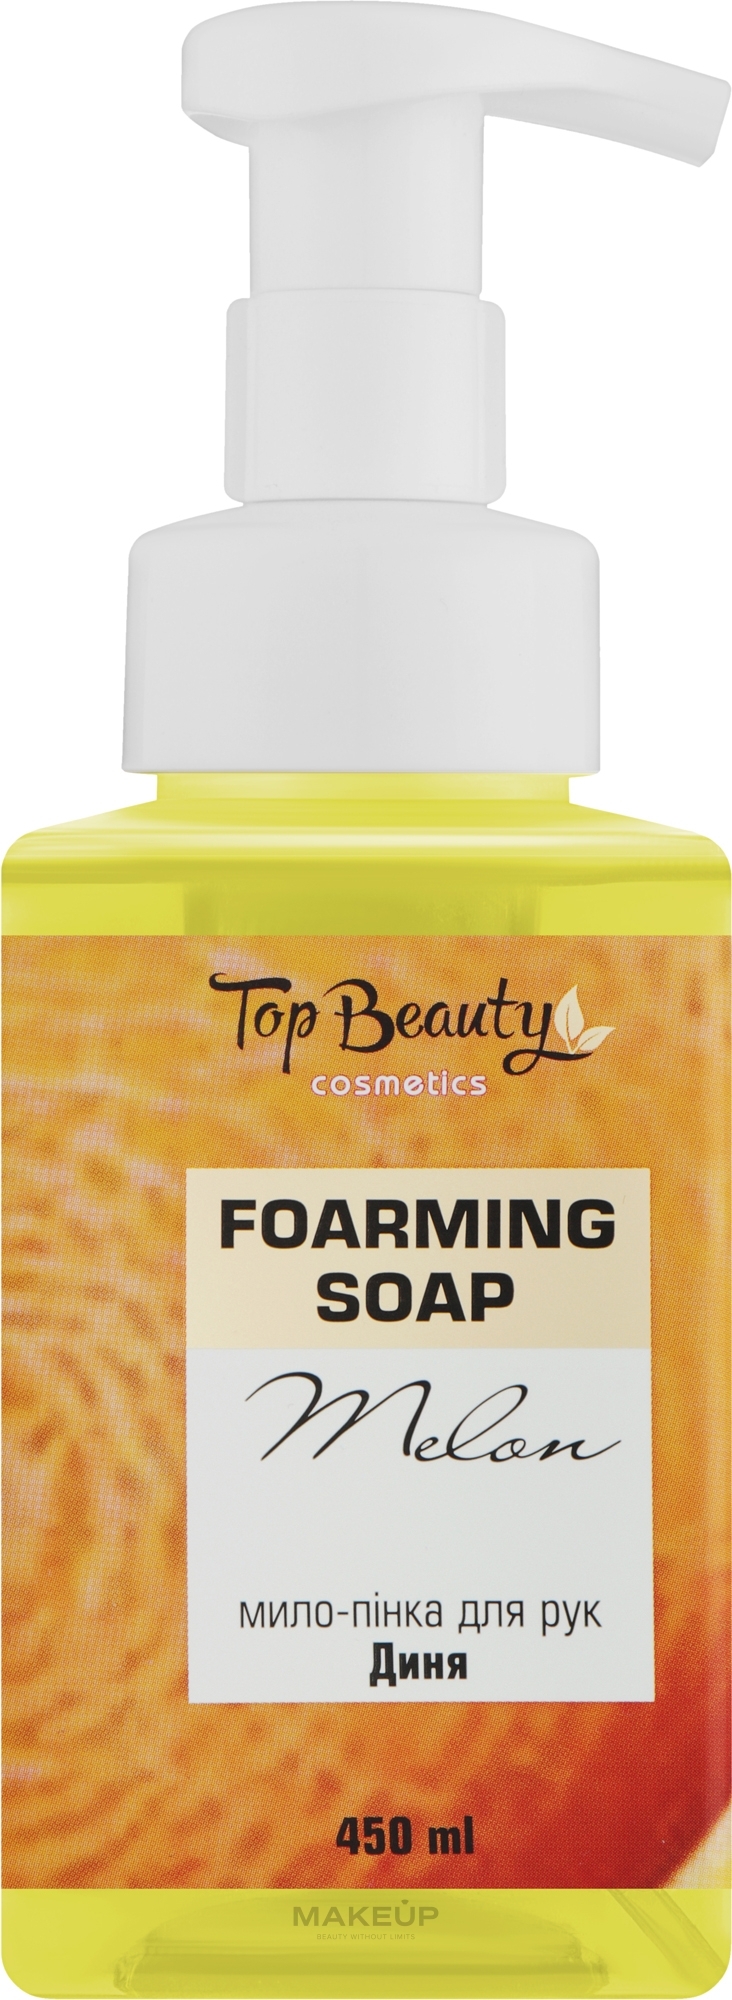 Мыло-пенка для рук "Дыня" - Top Beauty Foarming Soap  — фото 450ml